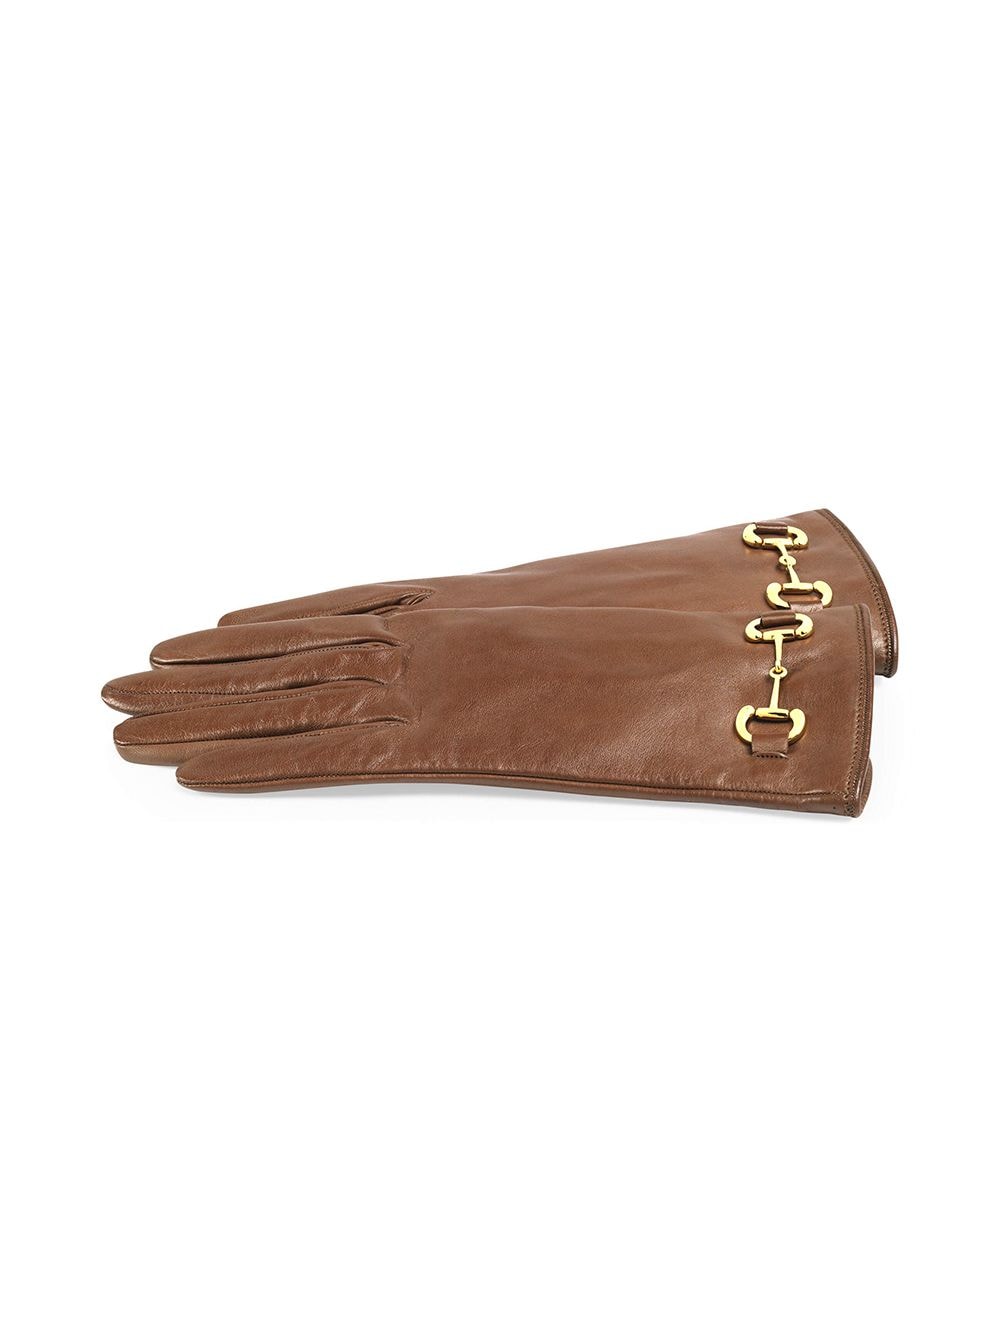 фото Gucci перчатки с пряжкой horsebit